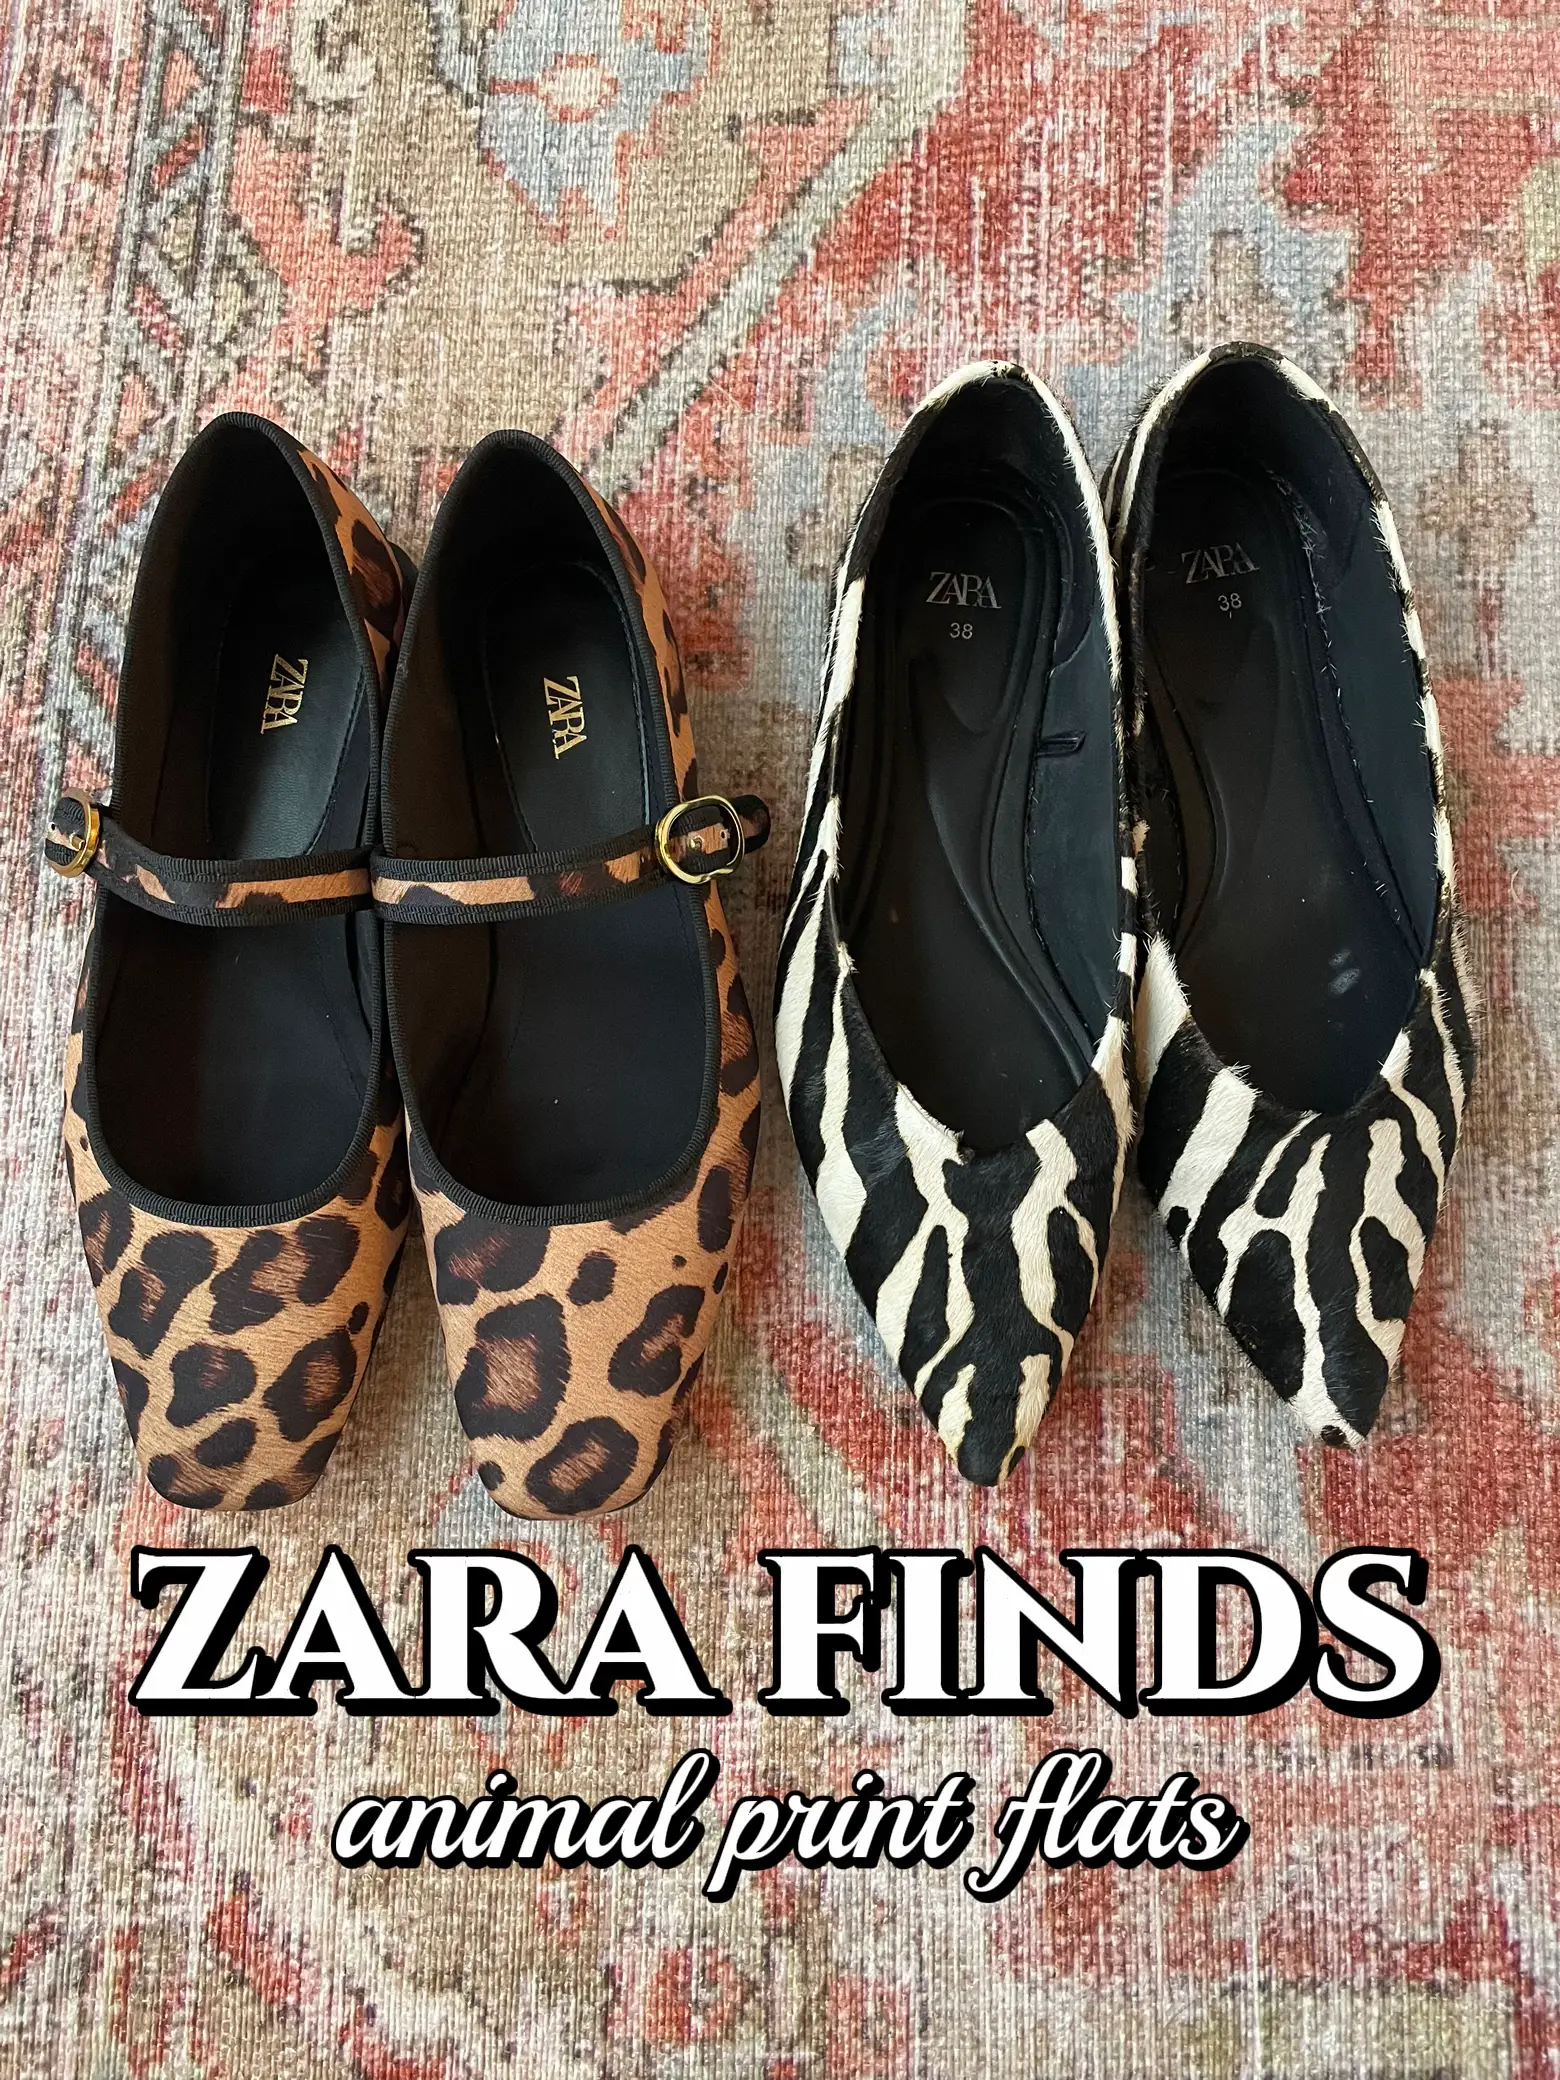 Zara Finds: Animal Print Flats  Gallery posted by erika schatz